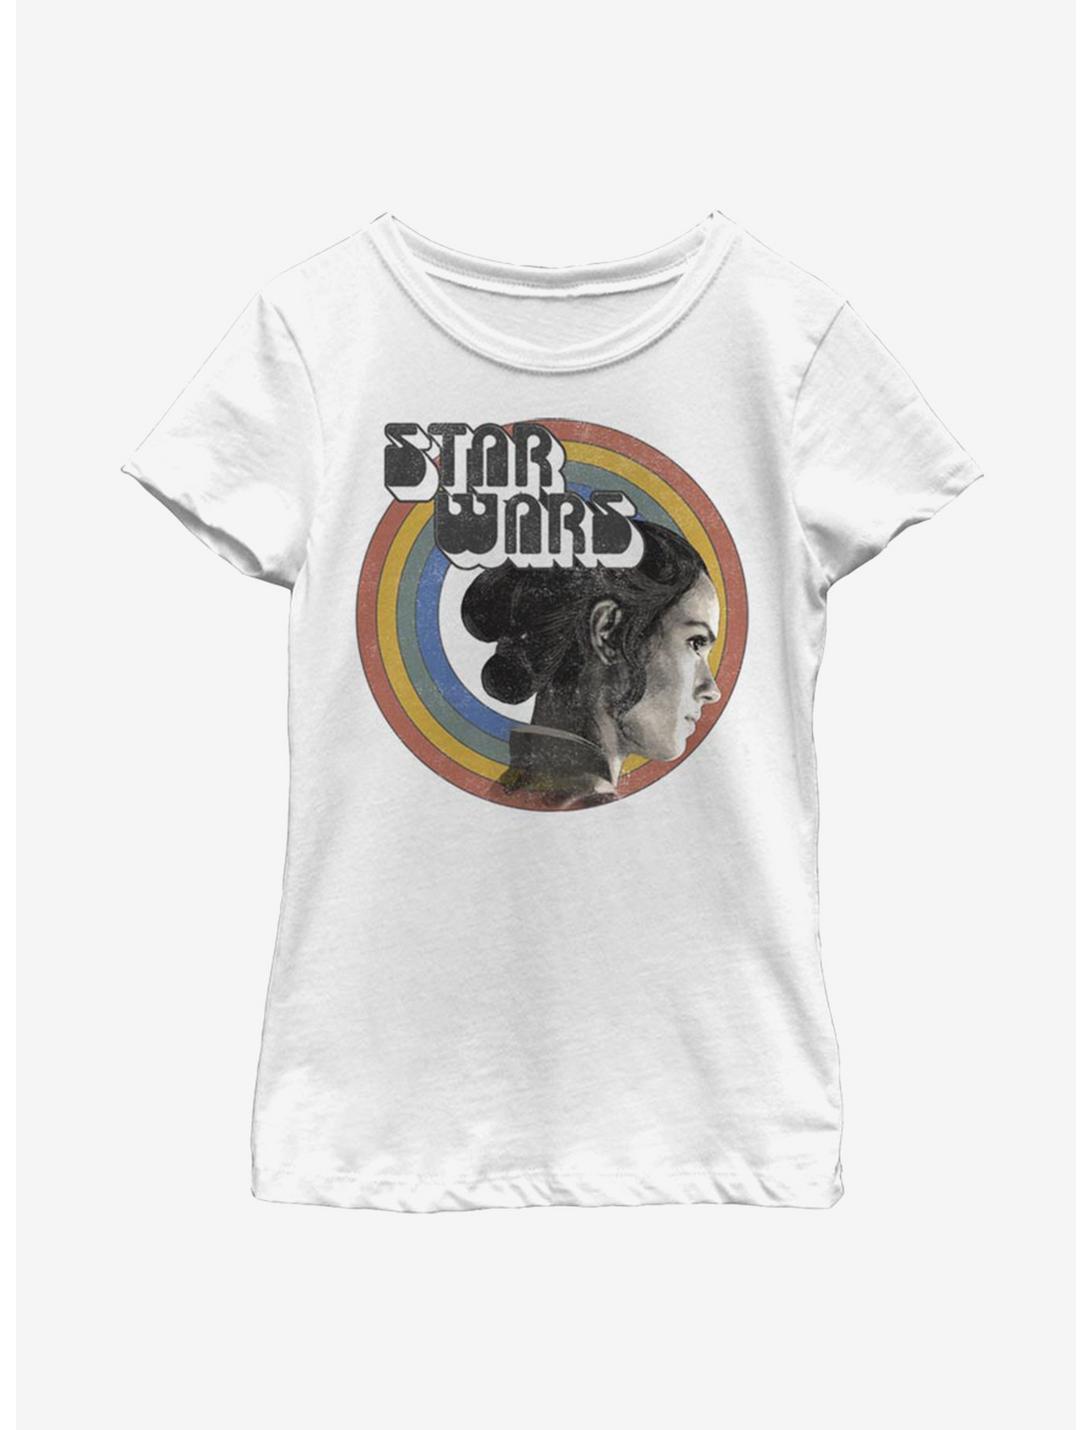 Star Wars Episode IX The Rise Of Skywalker Vintage Rey Rainbow white KTS Youth Girls T-Shirt, WHITE, hi-res